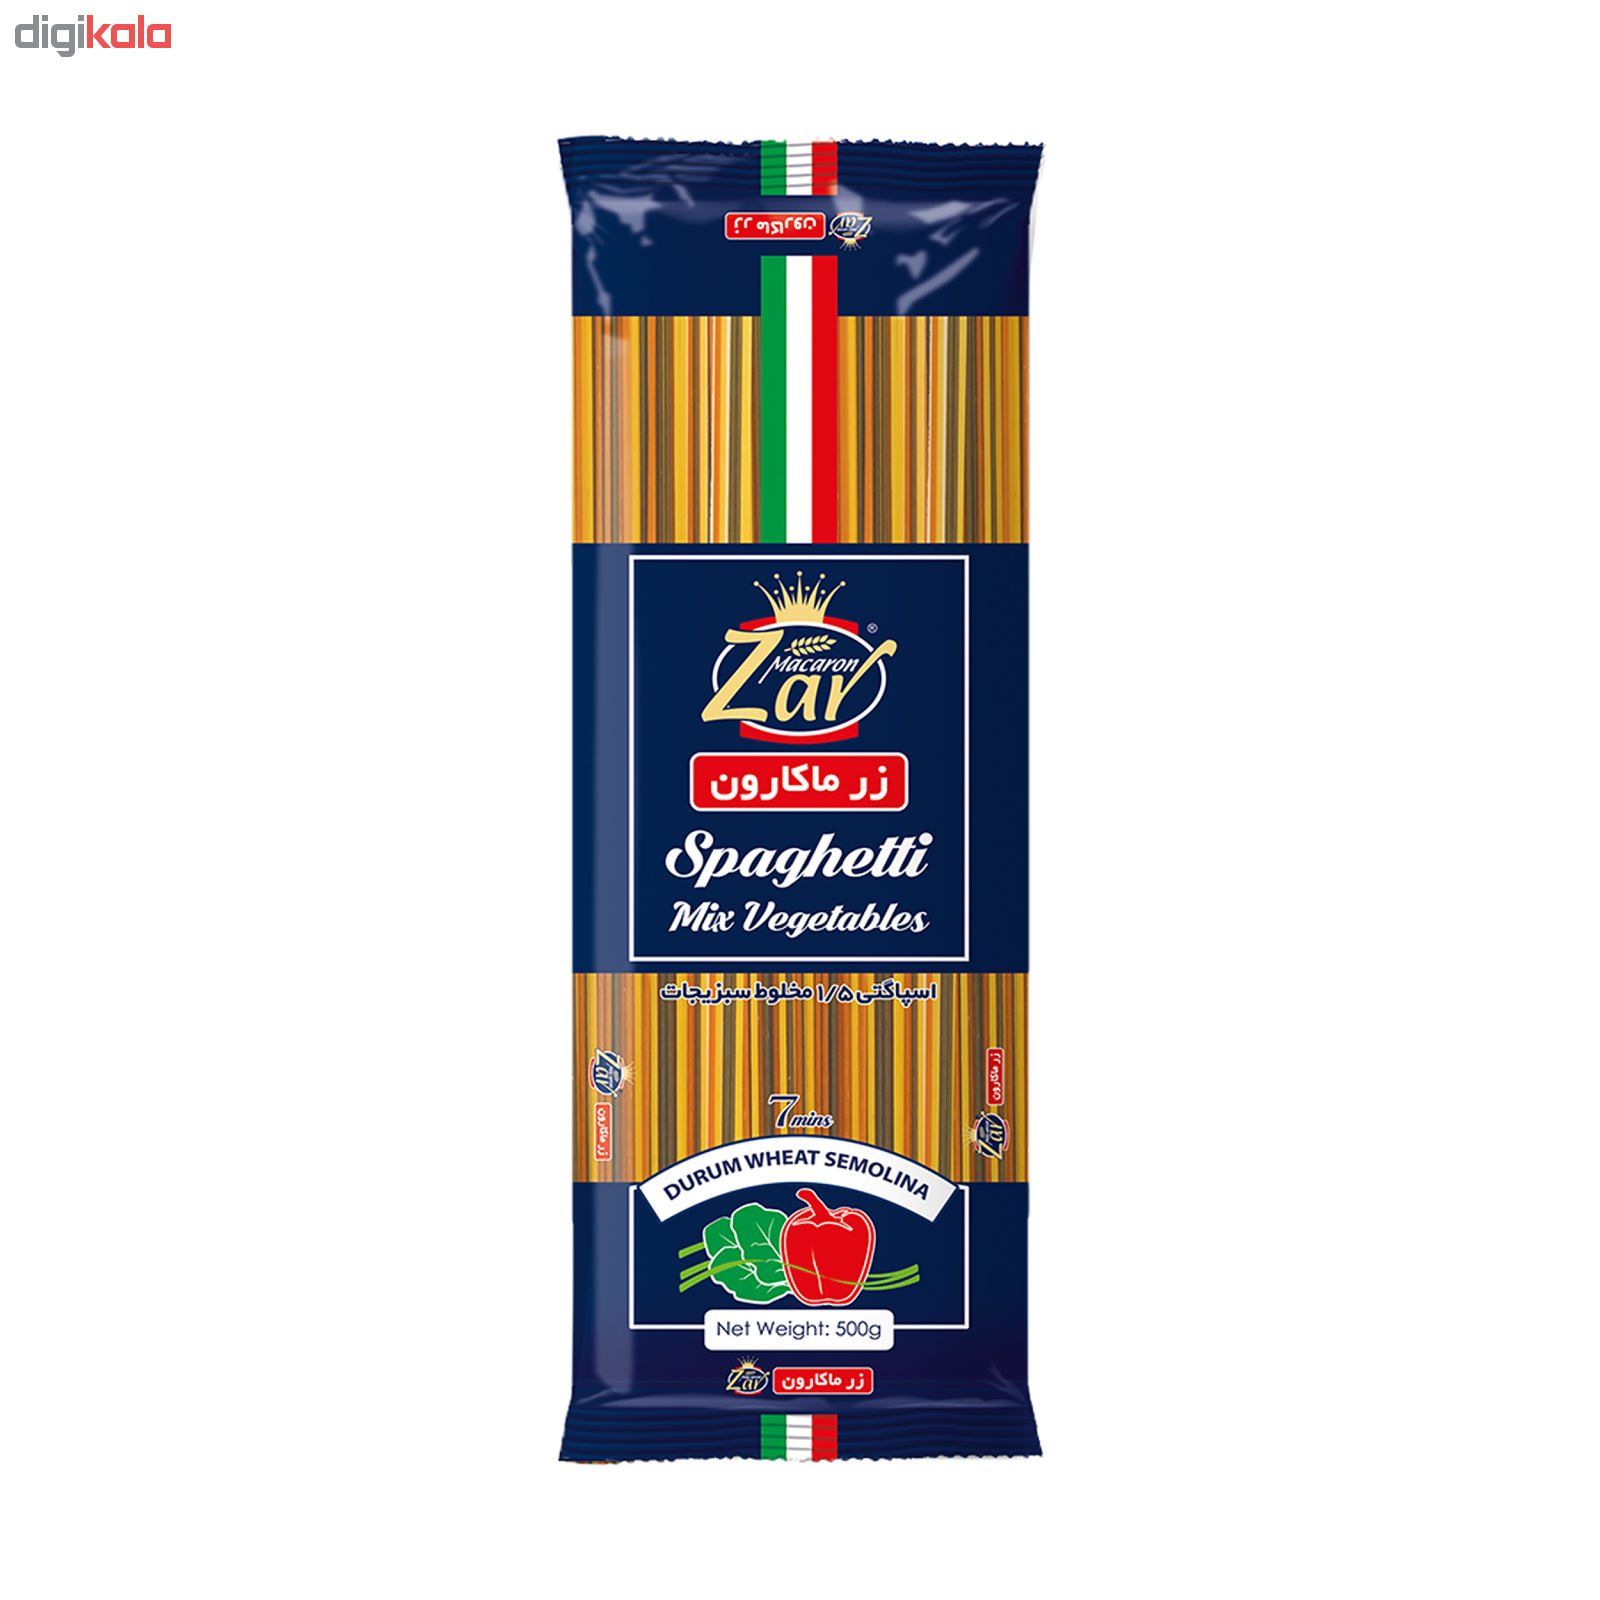 Spaghetti diameter 1.5 mixed vegetables zar macaroni quantity 500 grams